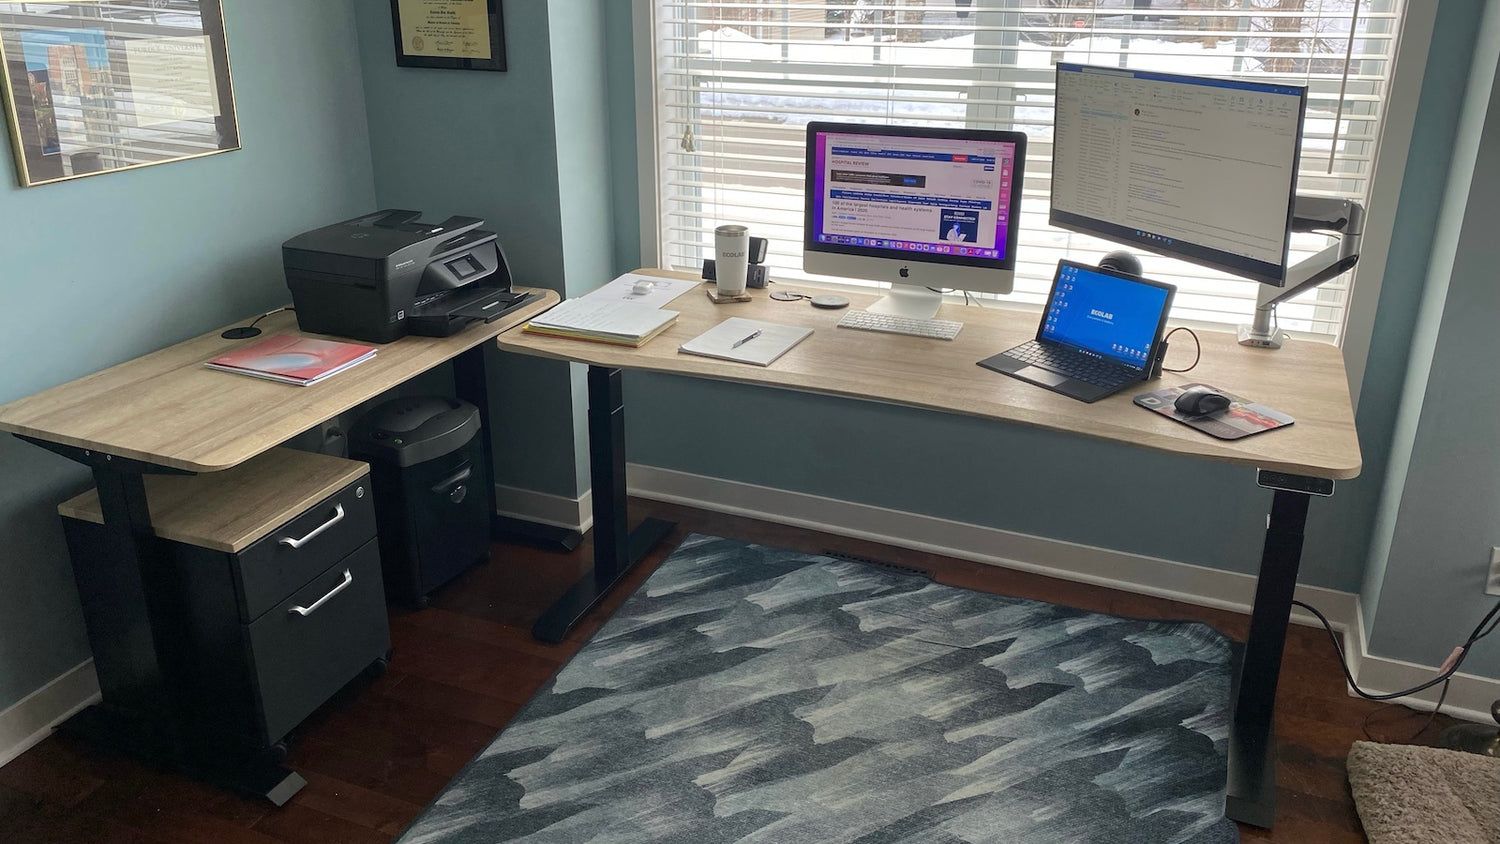 Slide Out Office Cabinet by UPLIFT Desk